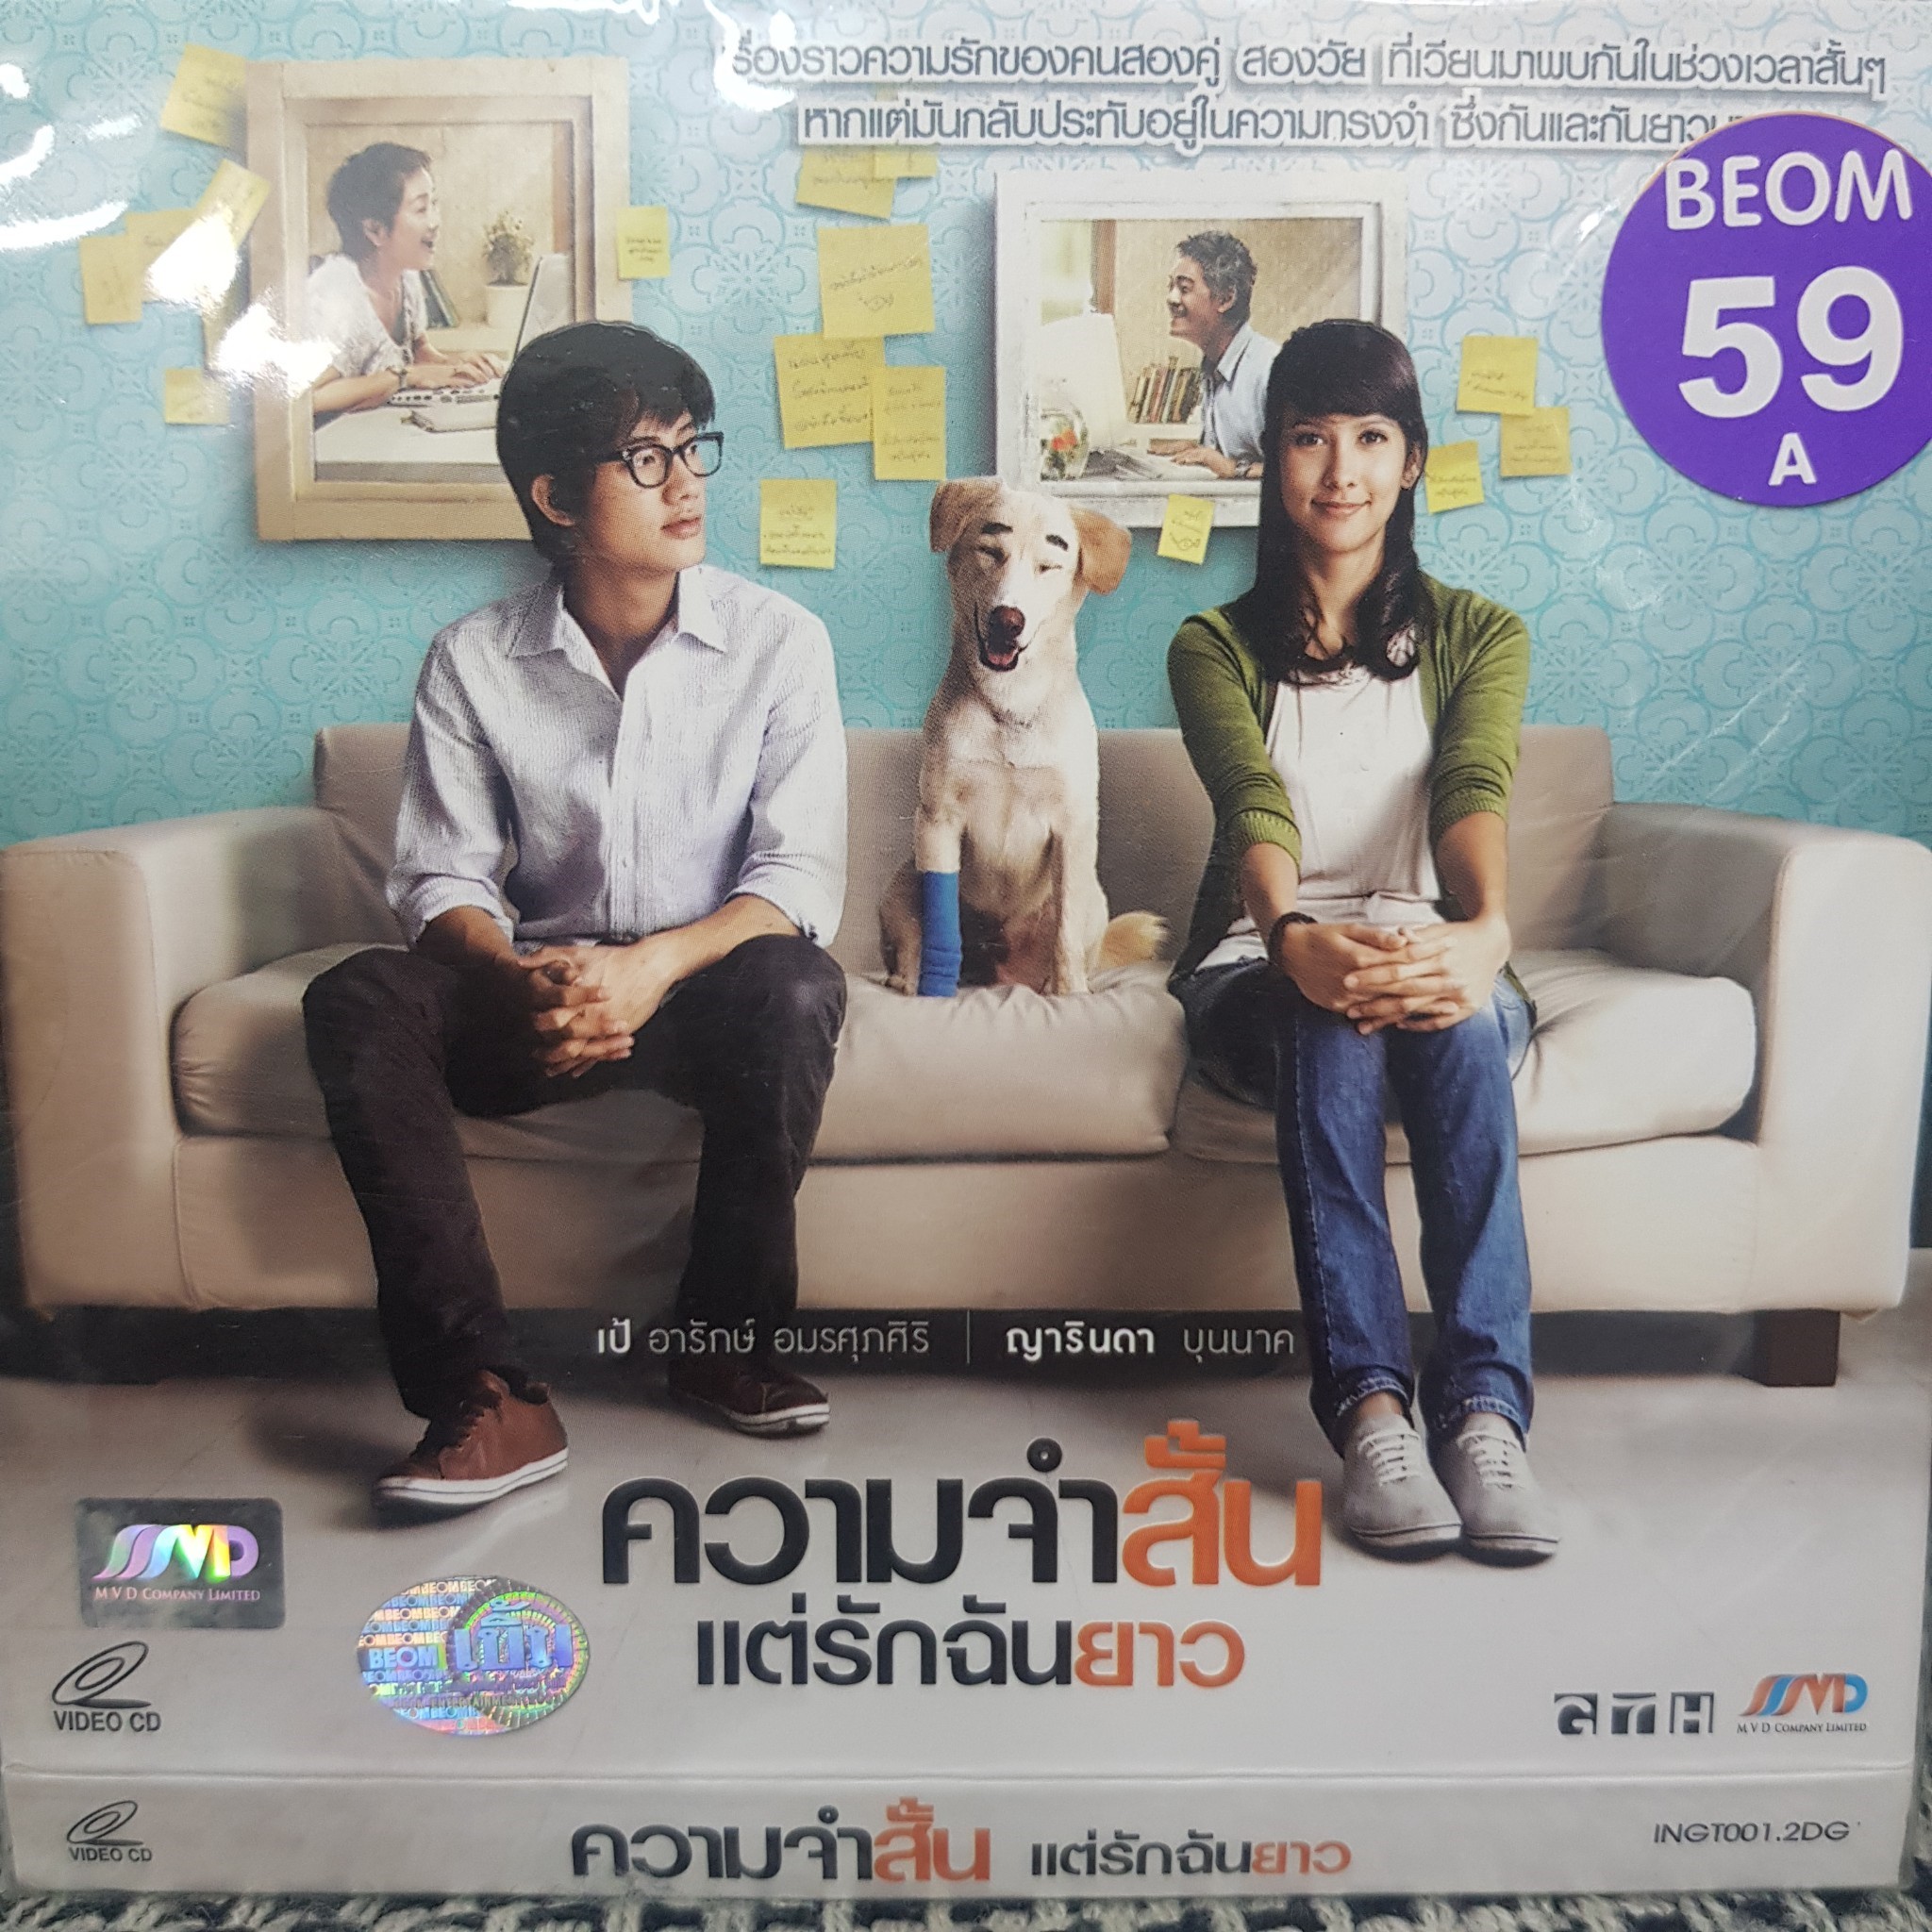 VCDหนัง ความจำสั้น แต่รักฉันยาว พากย์ไทย (SBYVCD2020-ความจำสั้นแต่รักฉันยาว) โรแมนติก แผ่นหนัง สะสม หนังโรงภาพยนตร์ ภาพยนตร์ หนังไทยเก่า หนัง งาน2020 cinema vcd วีซีดี STARMART